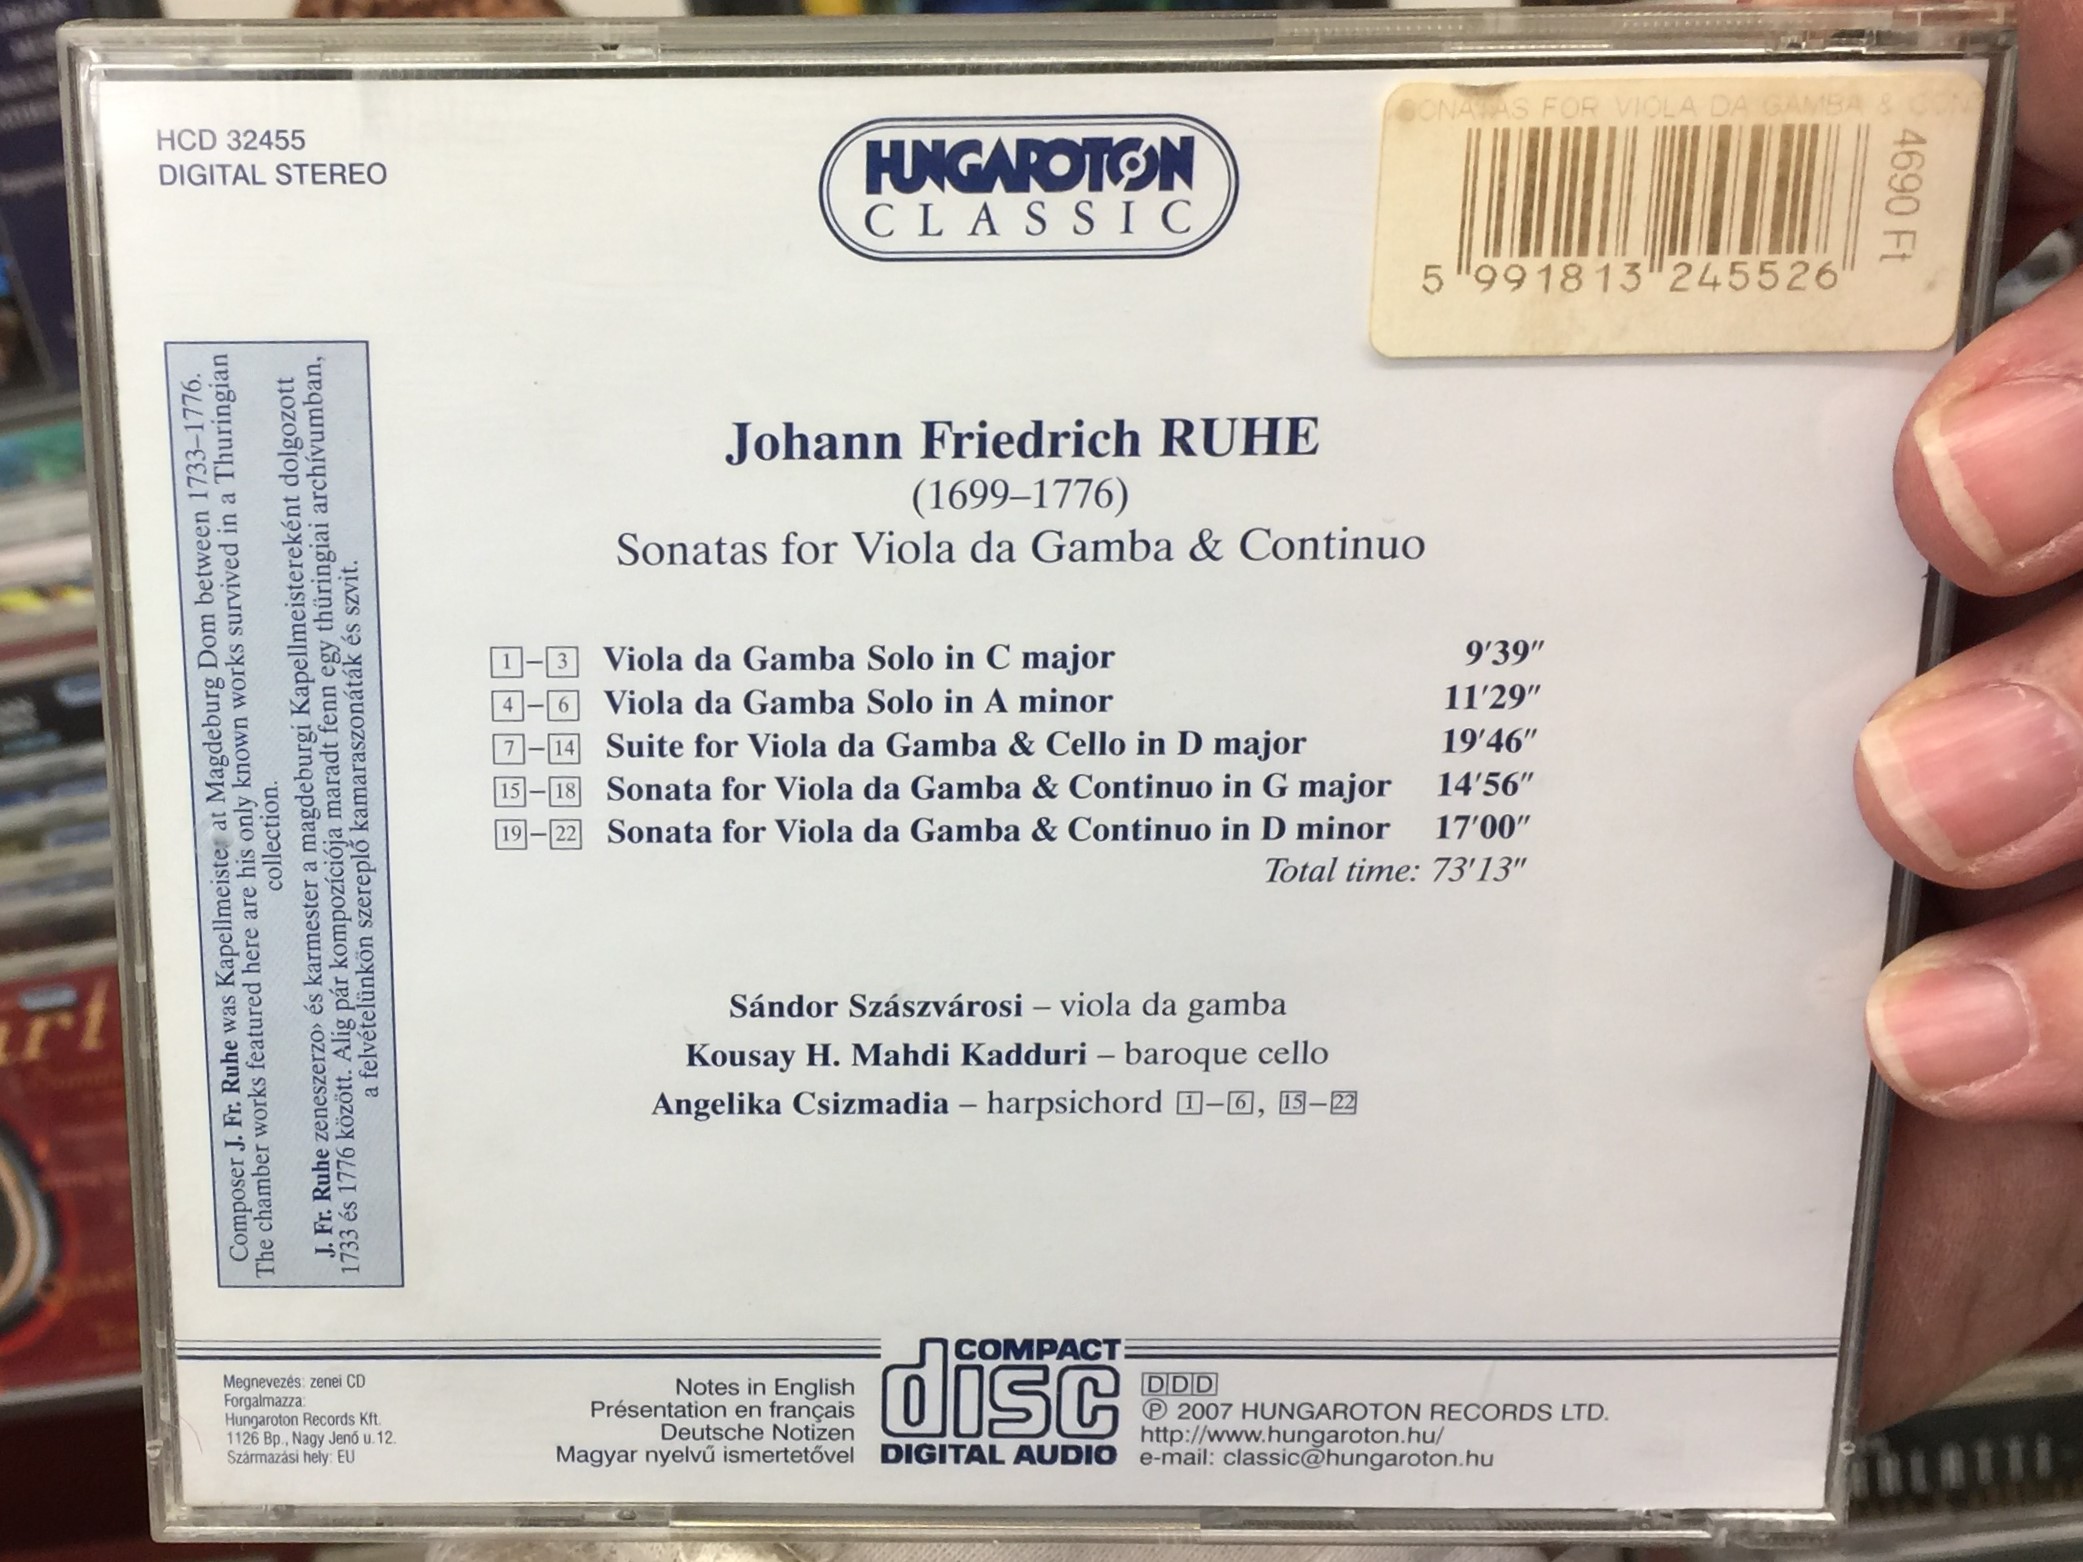 j.-f.-ruhe-sonatas-for-viola-da-gamba-continuo-sandor-szaszvarosi-viola-da-gamba-kousay-h.-mahdi-kadduri-baroque-cello-angelika-csizmadia-harpsichord-hungaroton-classic-audio-cd-200.jpg